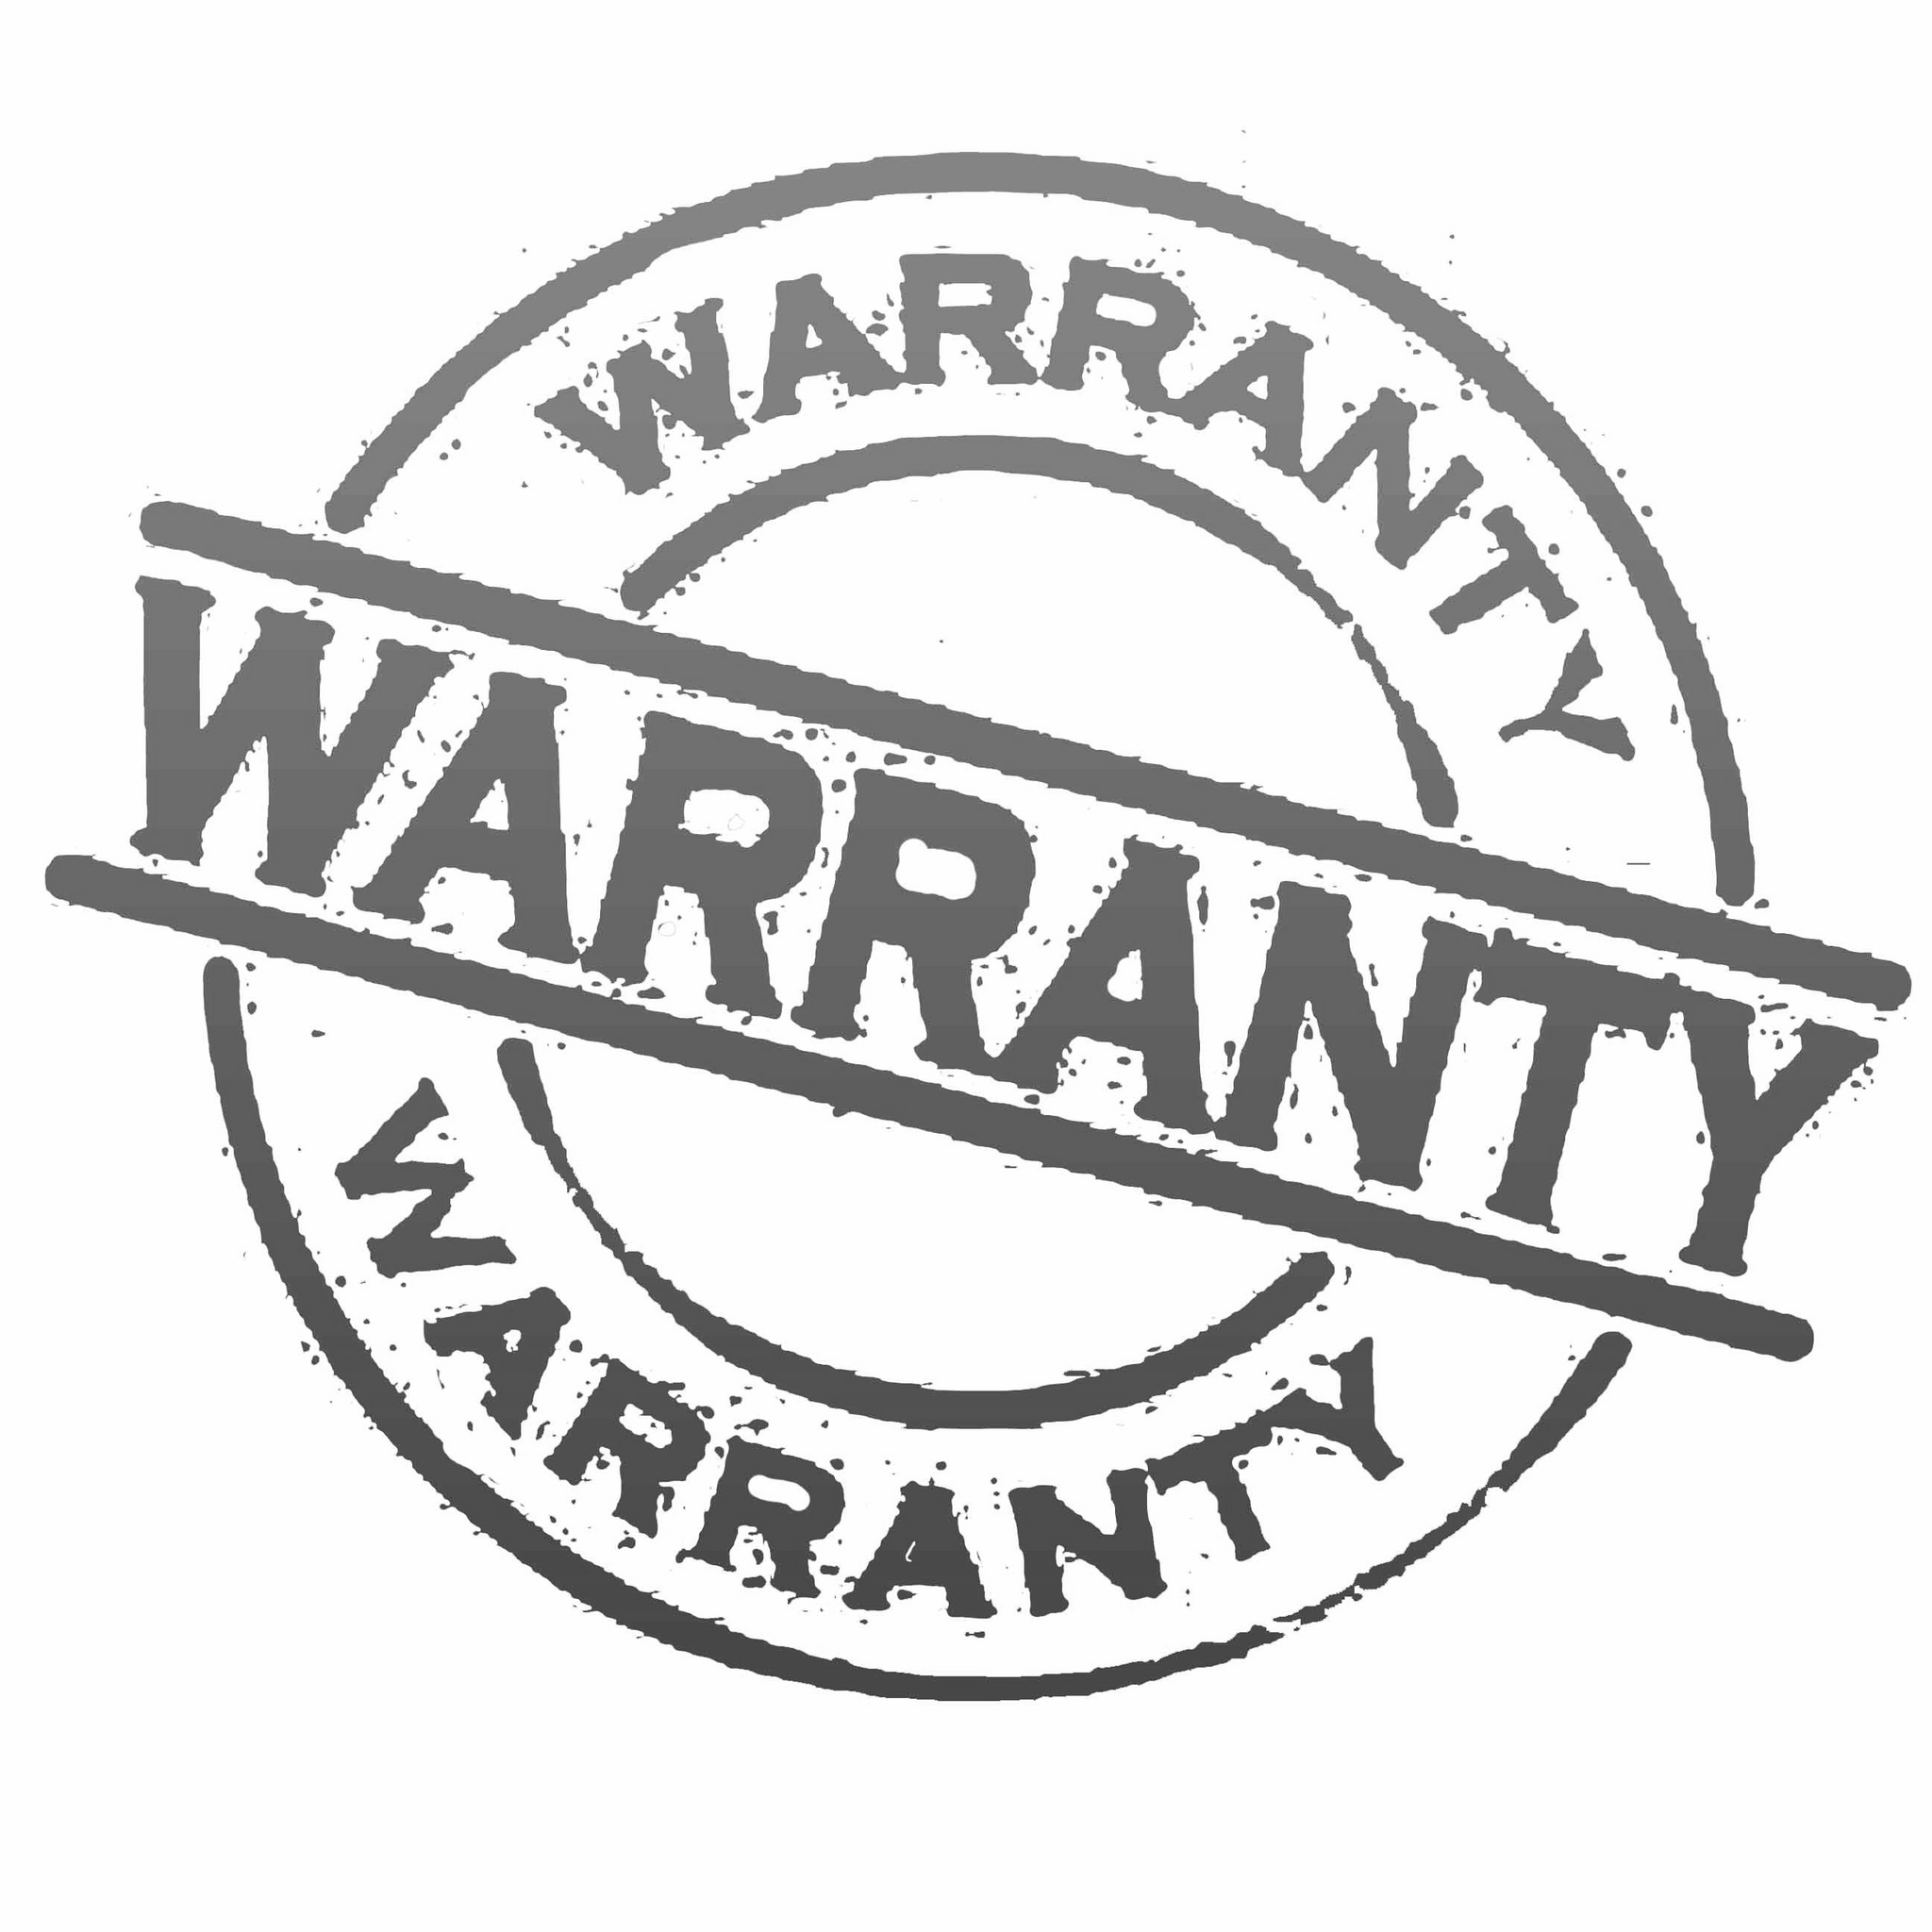 1-Year Extended Warranty